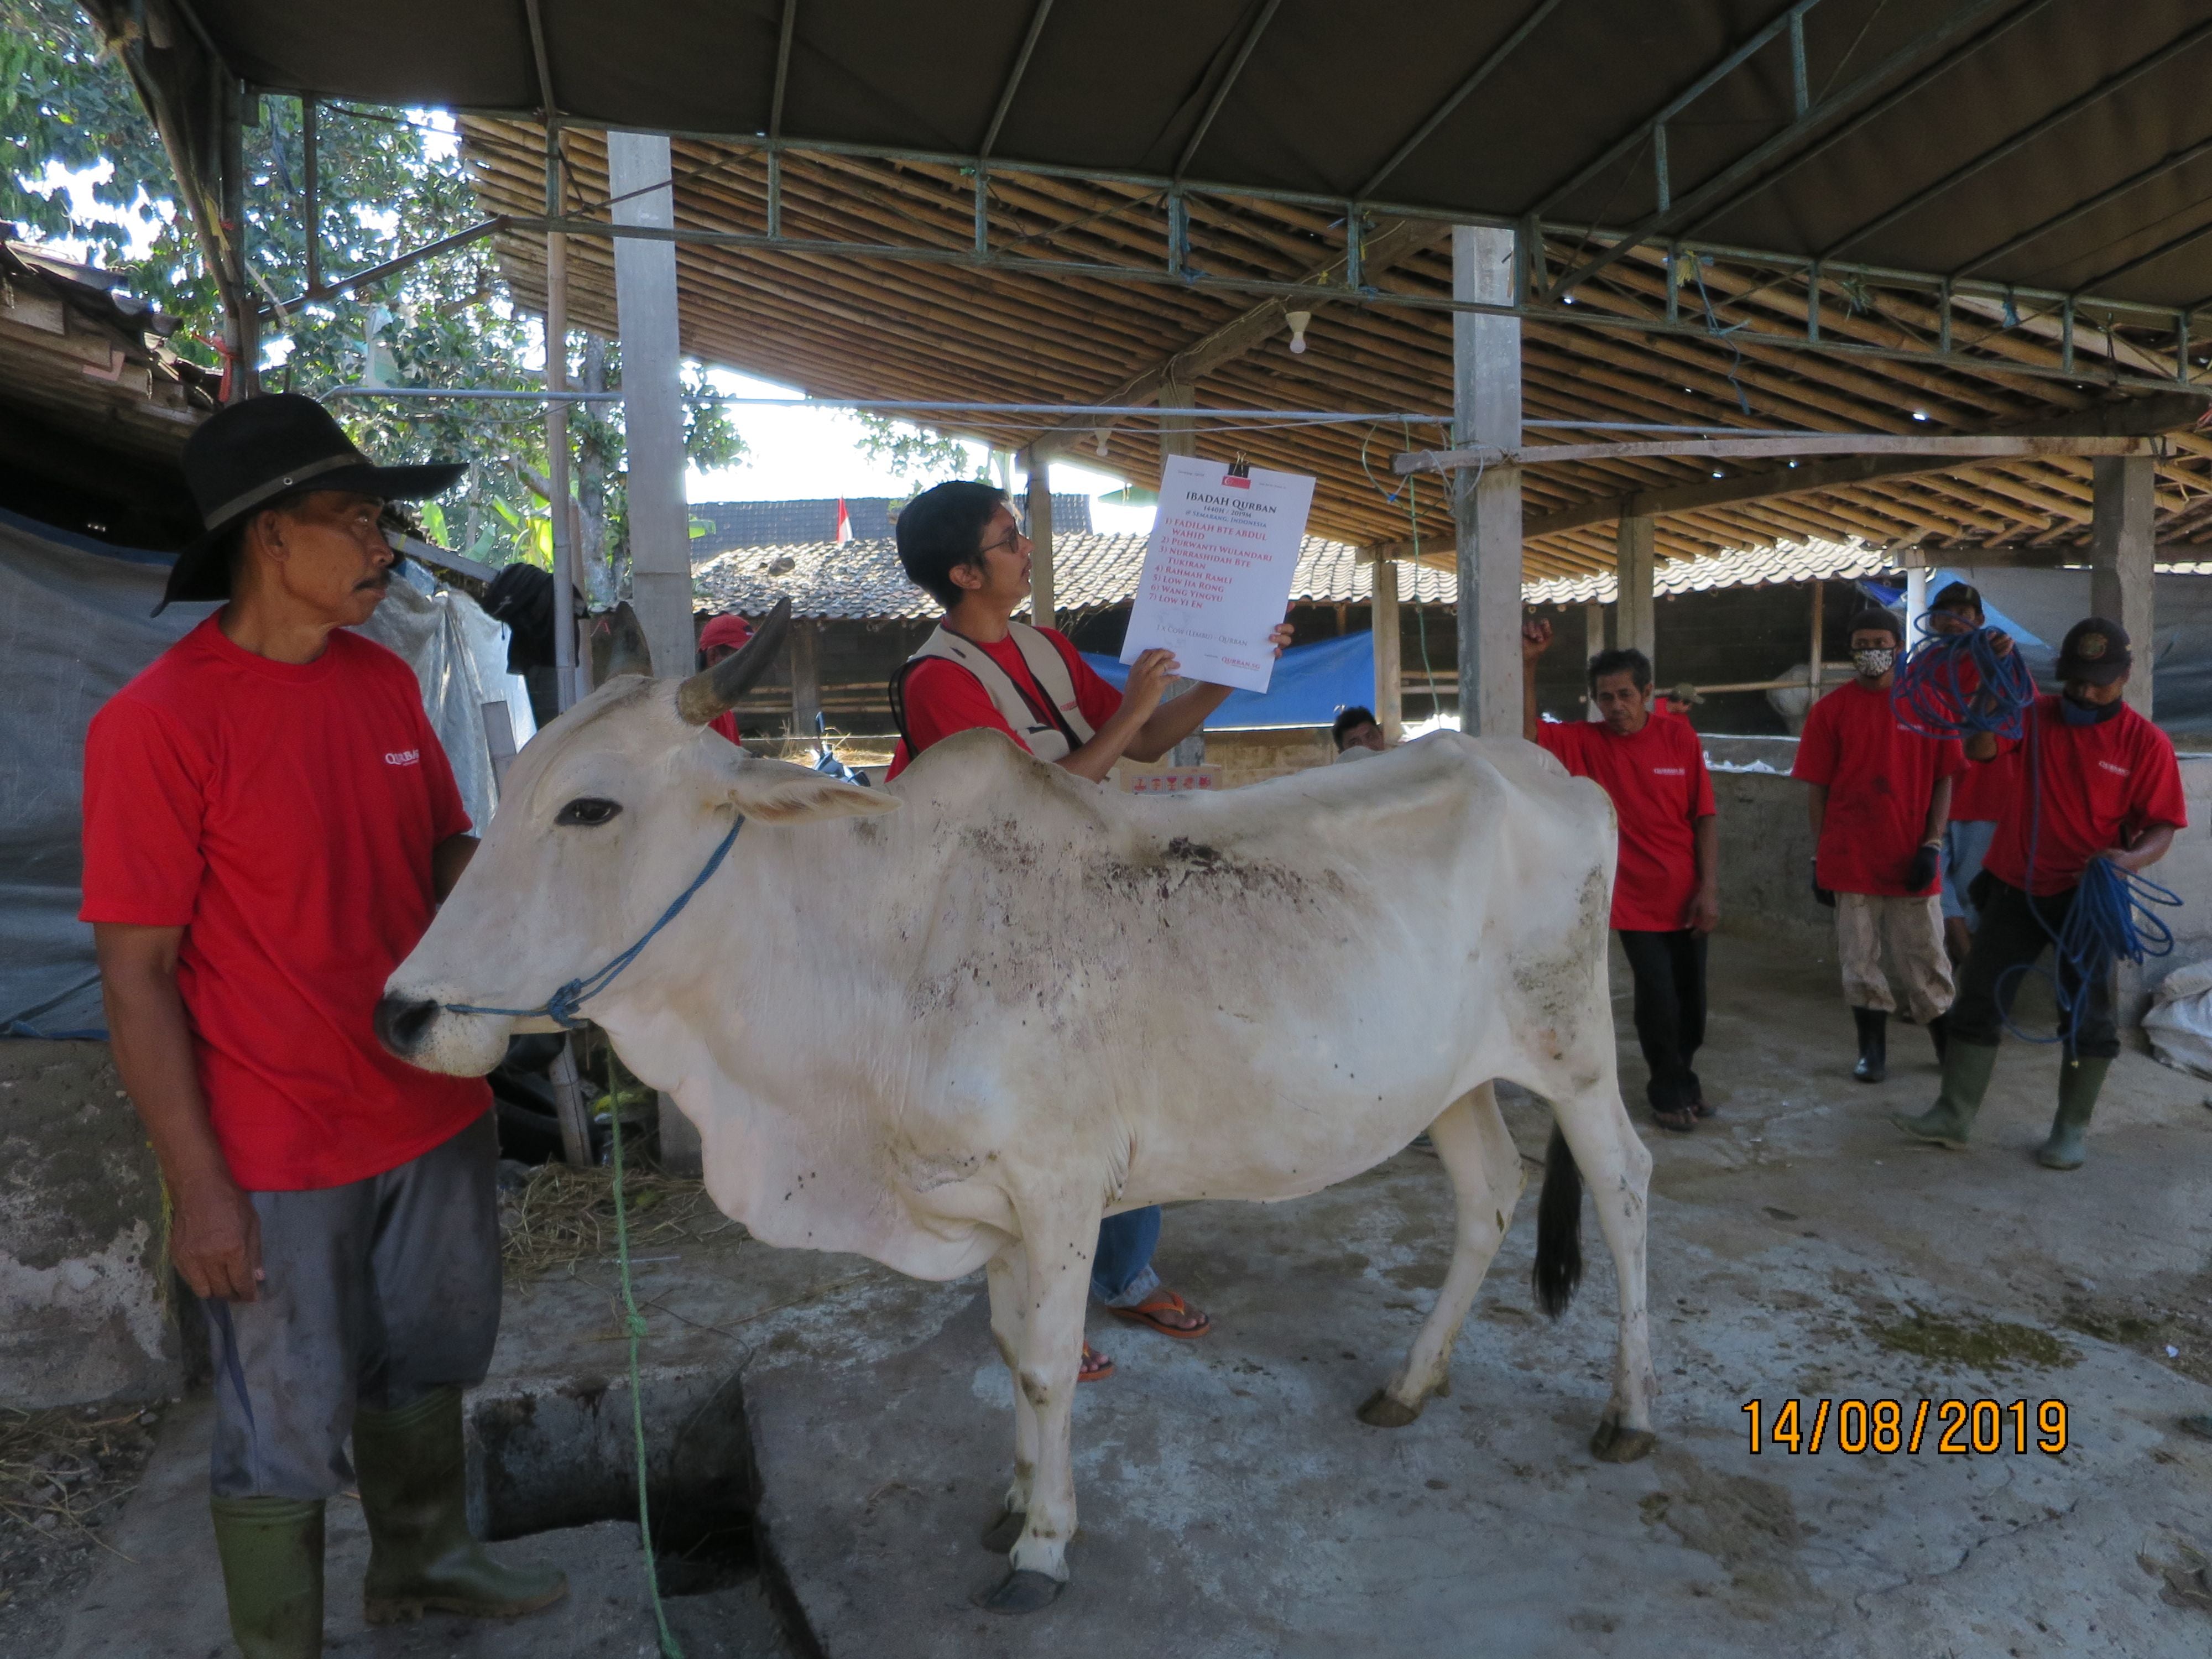 Qurban 1 Sheep/Goat Indonesia